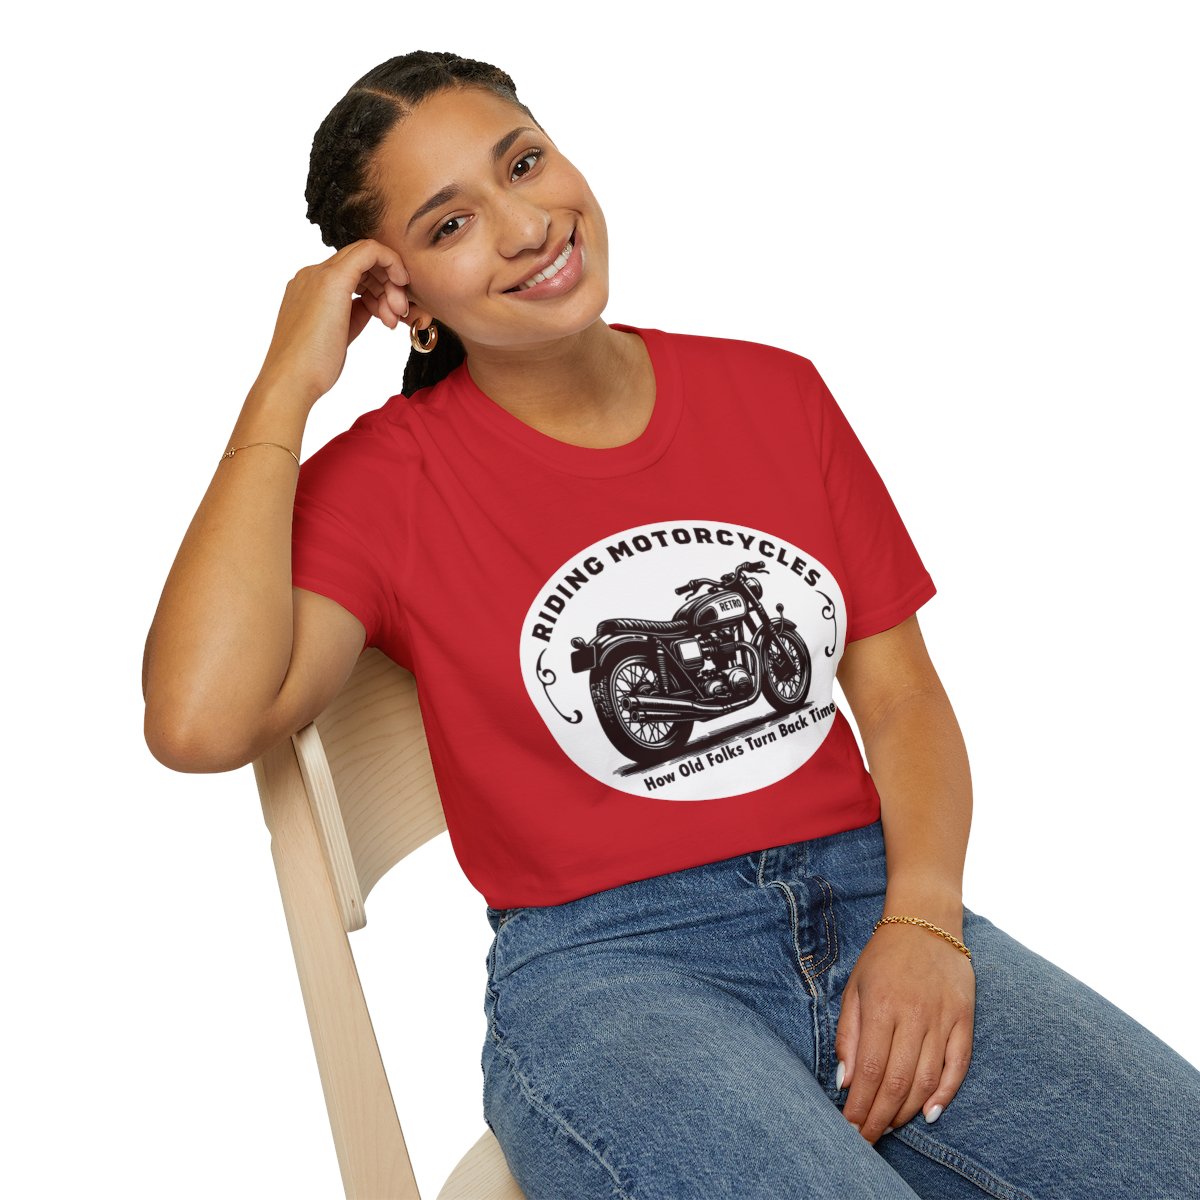 cool motorcycle t-shirts - harley-davidson, triumph, ducati, honda, yamaha, suzuki